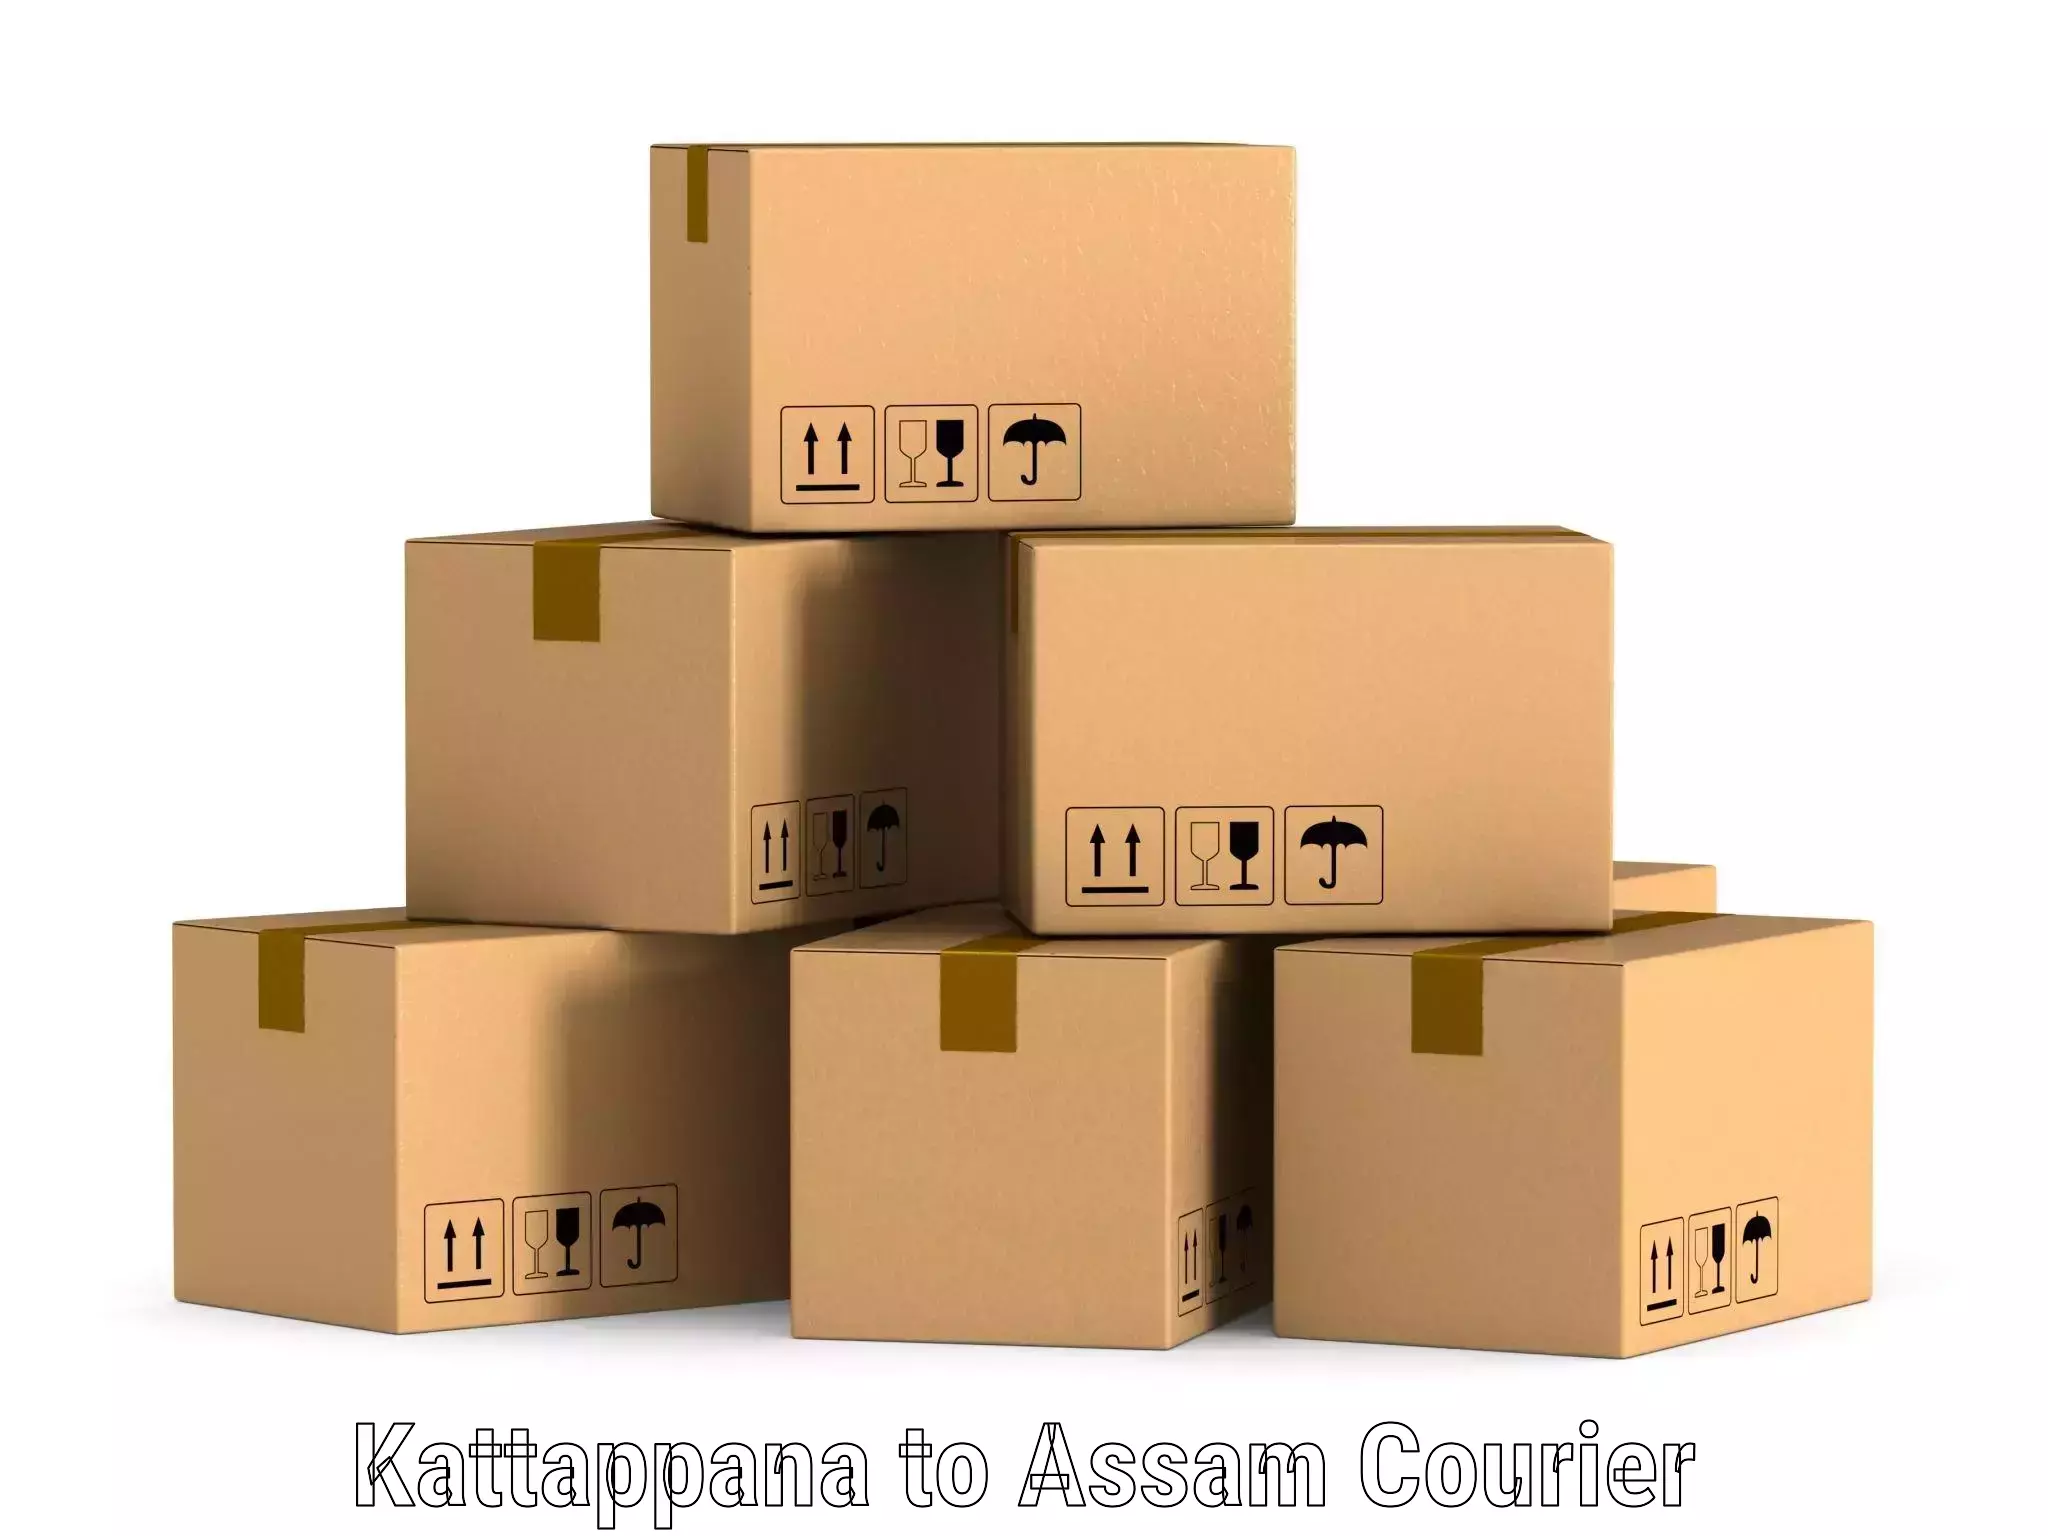 Supply chain efficiency Kattappana to Assam